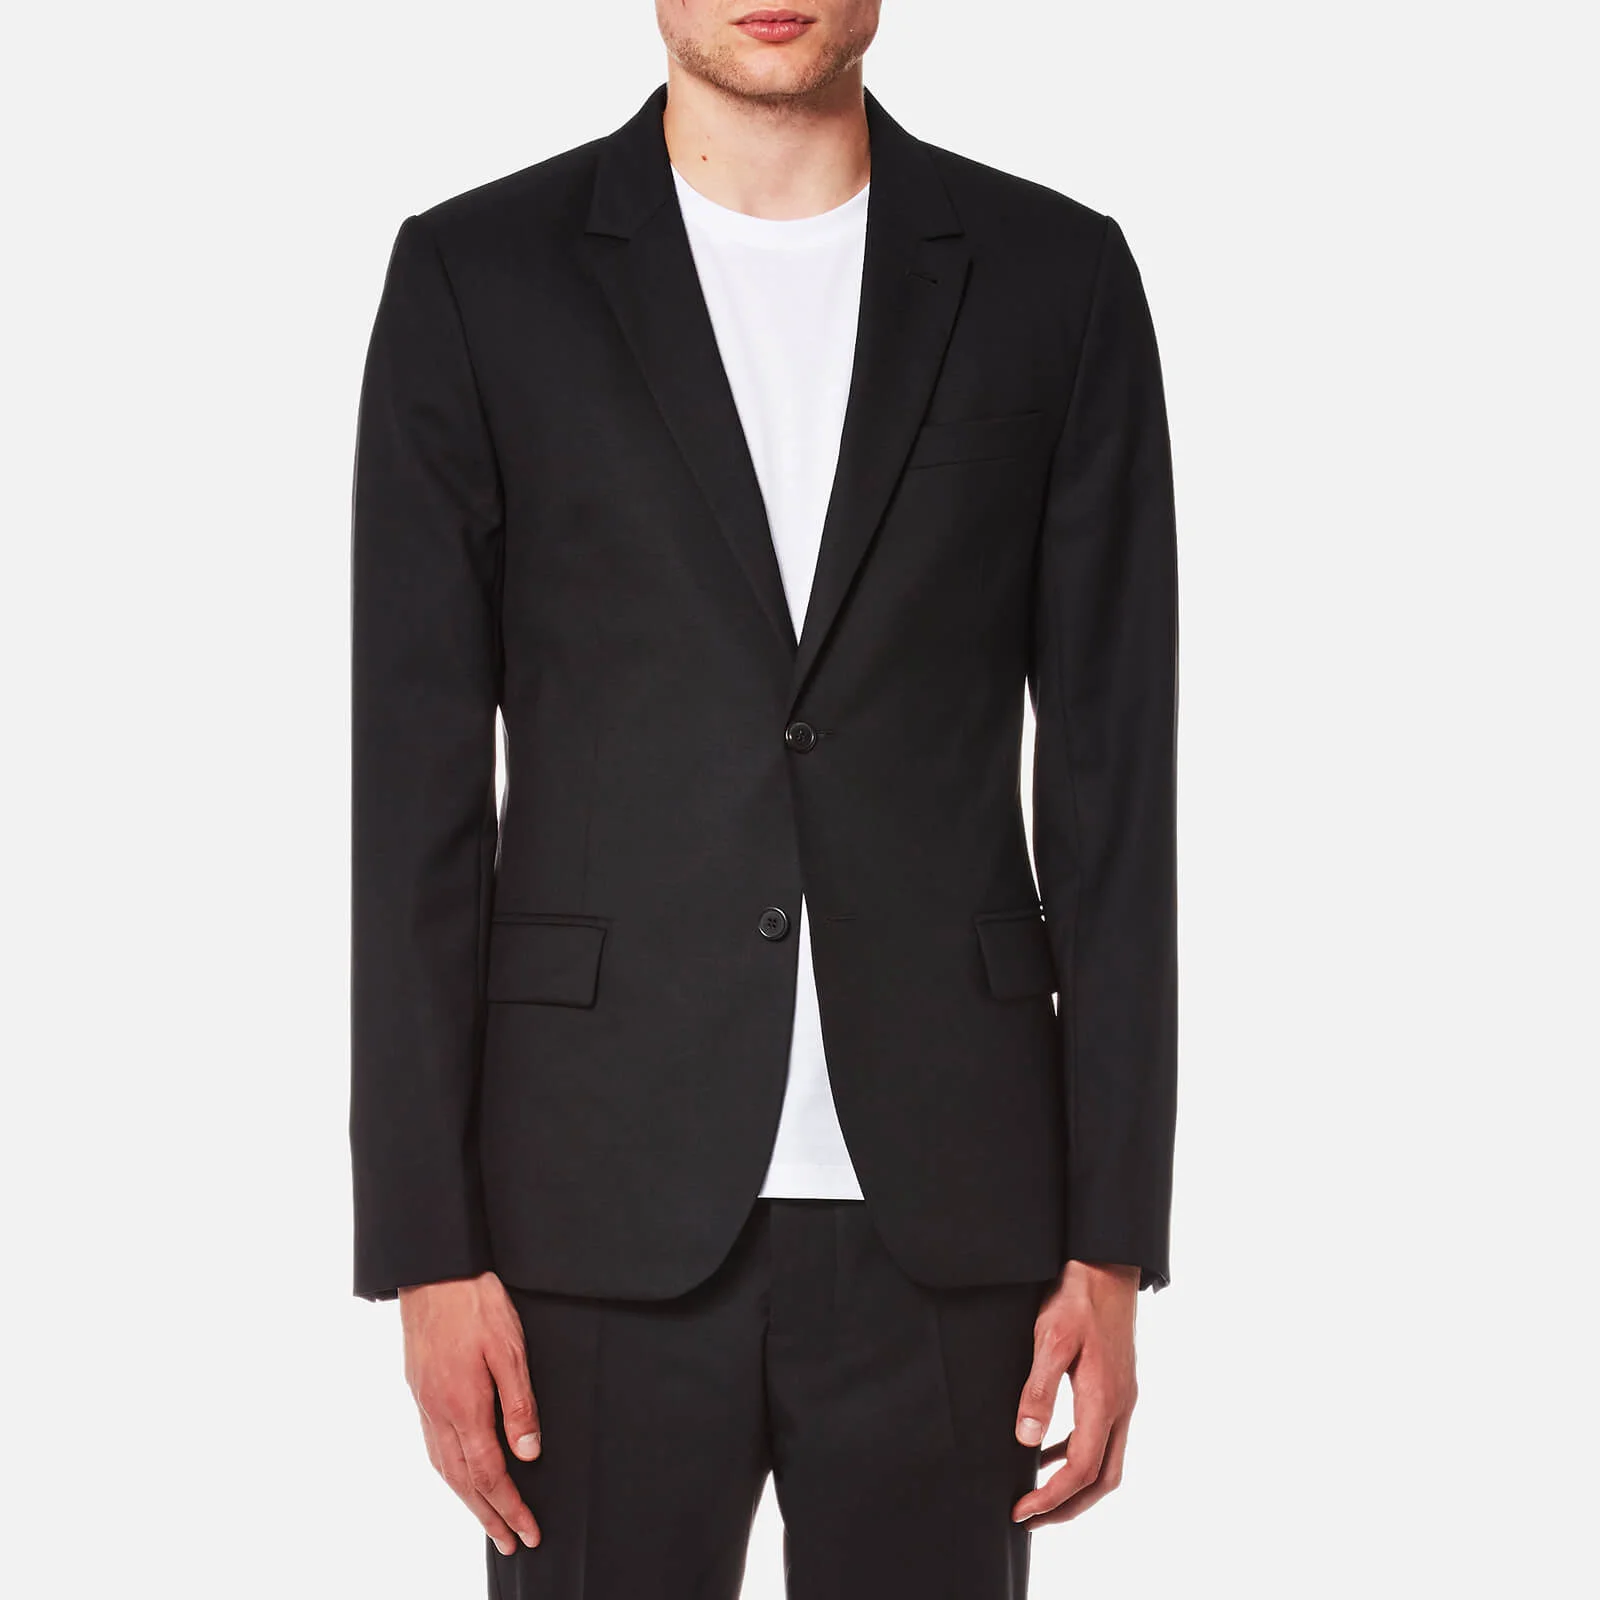 AMI Men's Two Button Lined Suit Jacket - Black Image 1